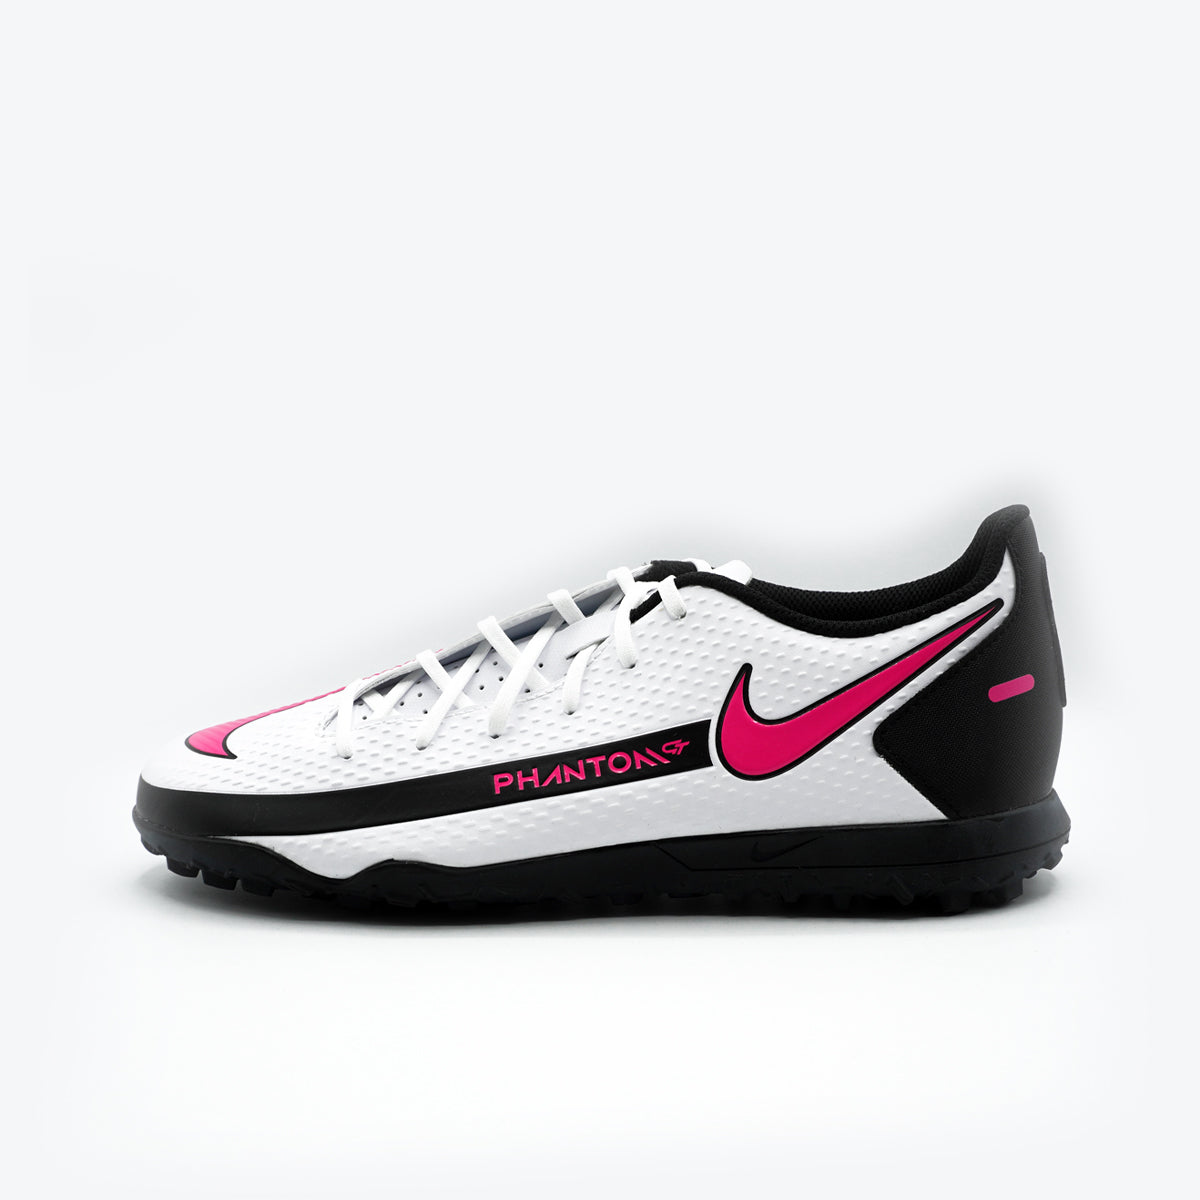 Nike Phantom GT Club TF Football Boots, White/Pink Blast/Black - UK 7